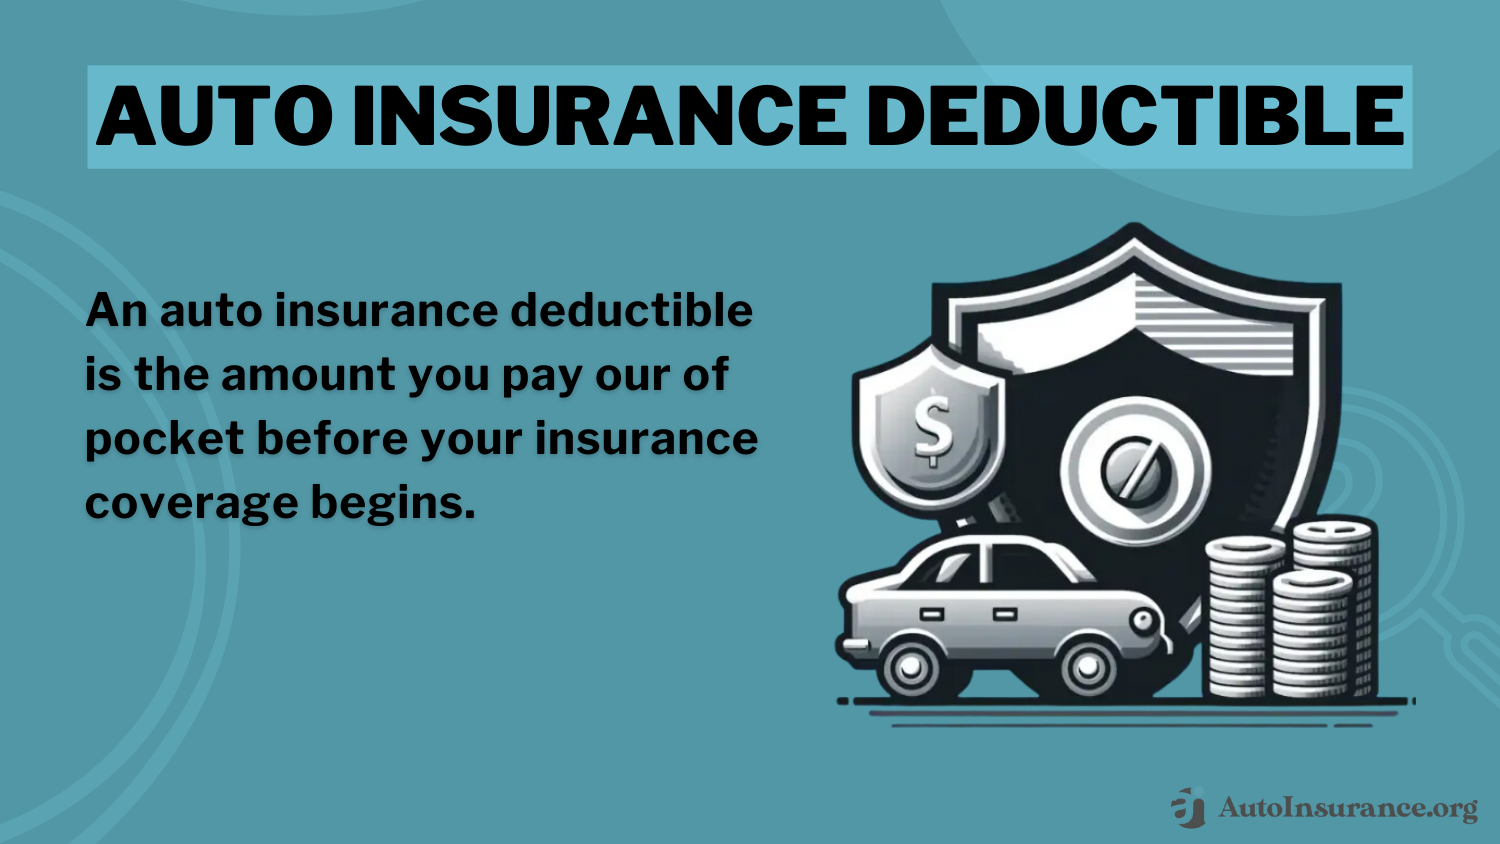 Best GMC Sierra 2500HD Auto Insurance: Auto insurance deductible definition card